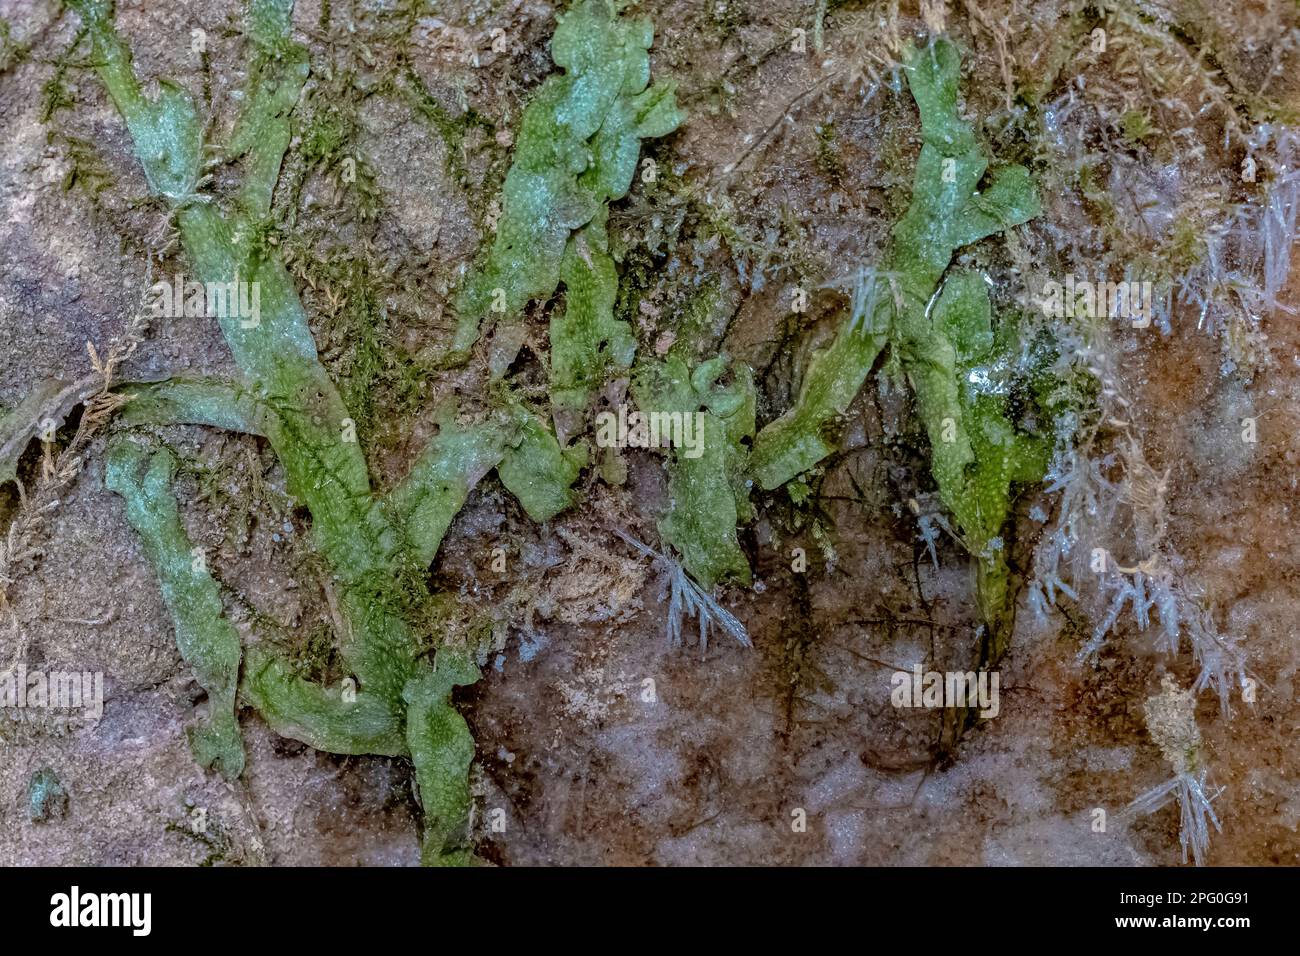 Snakeskin Liverwort,Conocephalum salebrosum, on dolomitic sandstone, Eben Ice Caves, Rock River Canyon Wilderness, Hiawatha National Forest, Michigan, Stock Photo